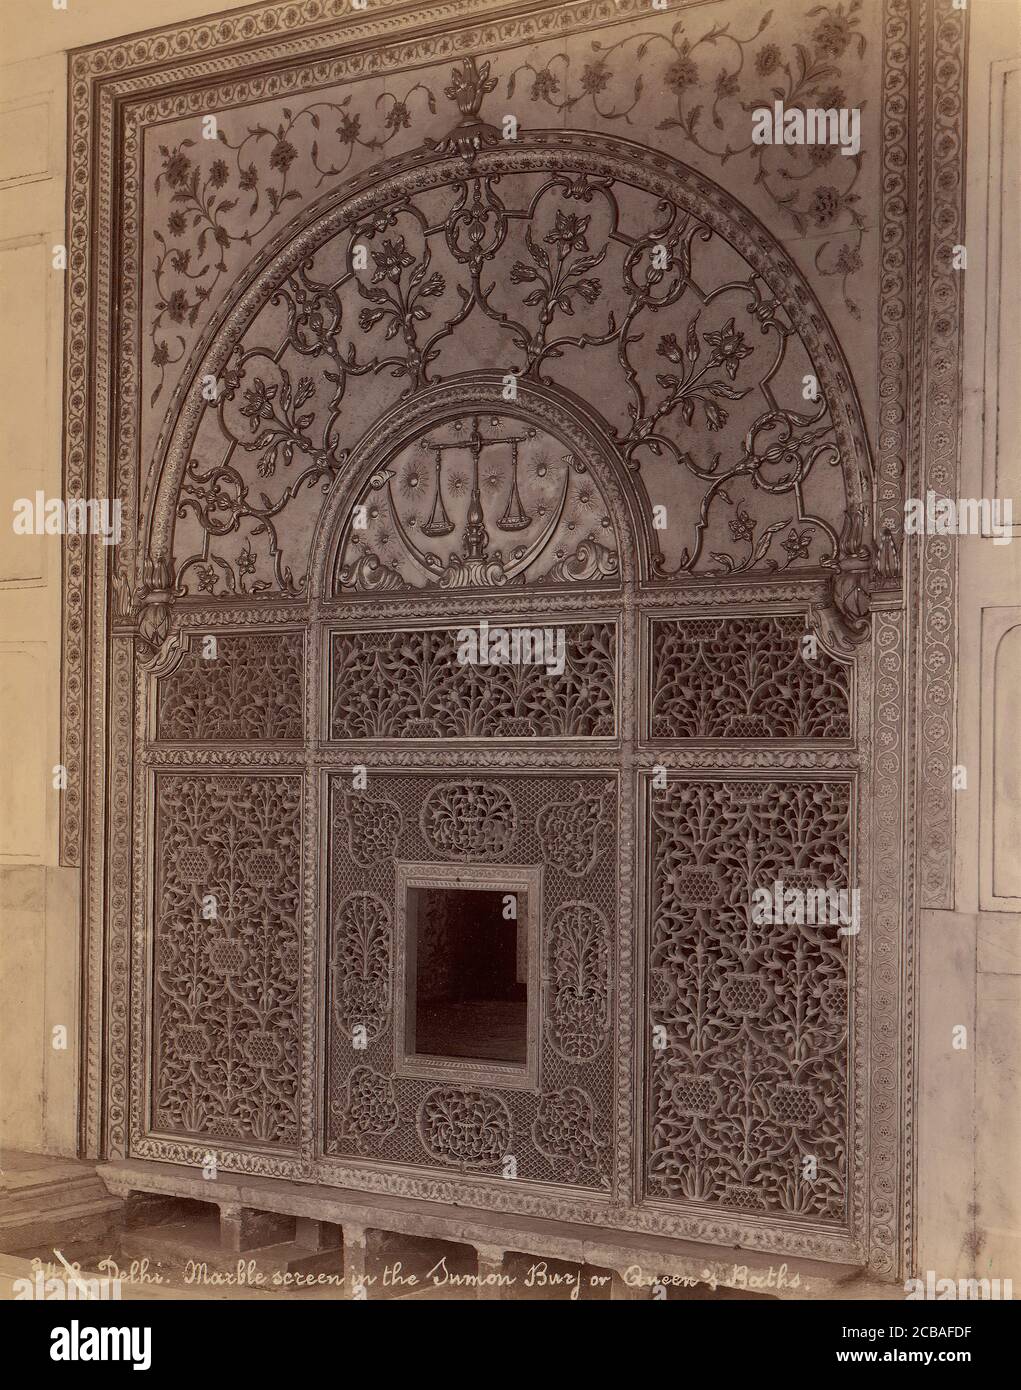 Marble Screen in the Sumon Burj or Queen's Baths, Delhi, 1860s-70s. Stock Photo